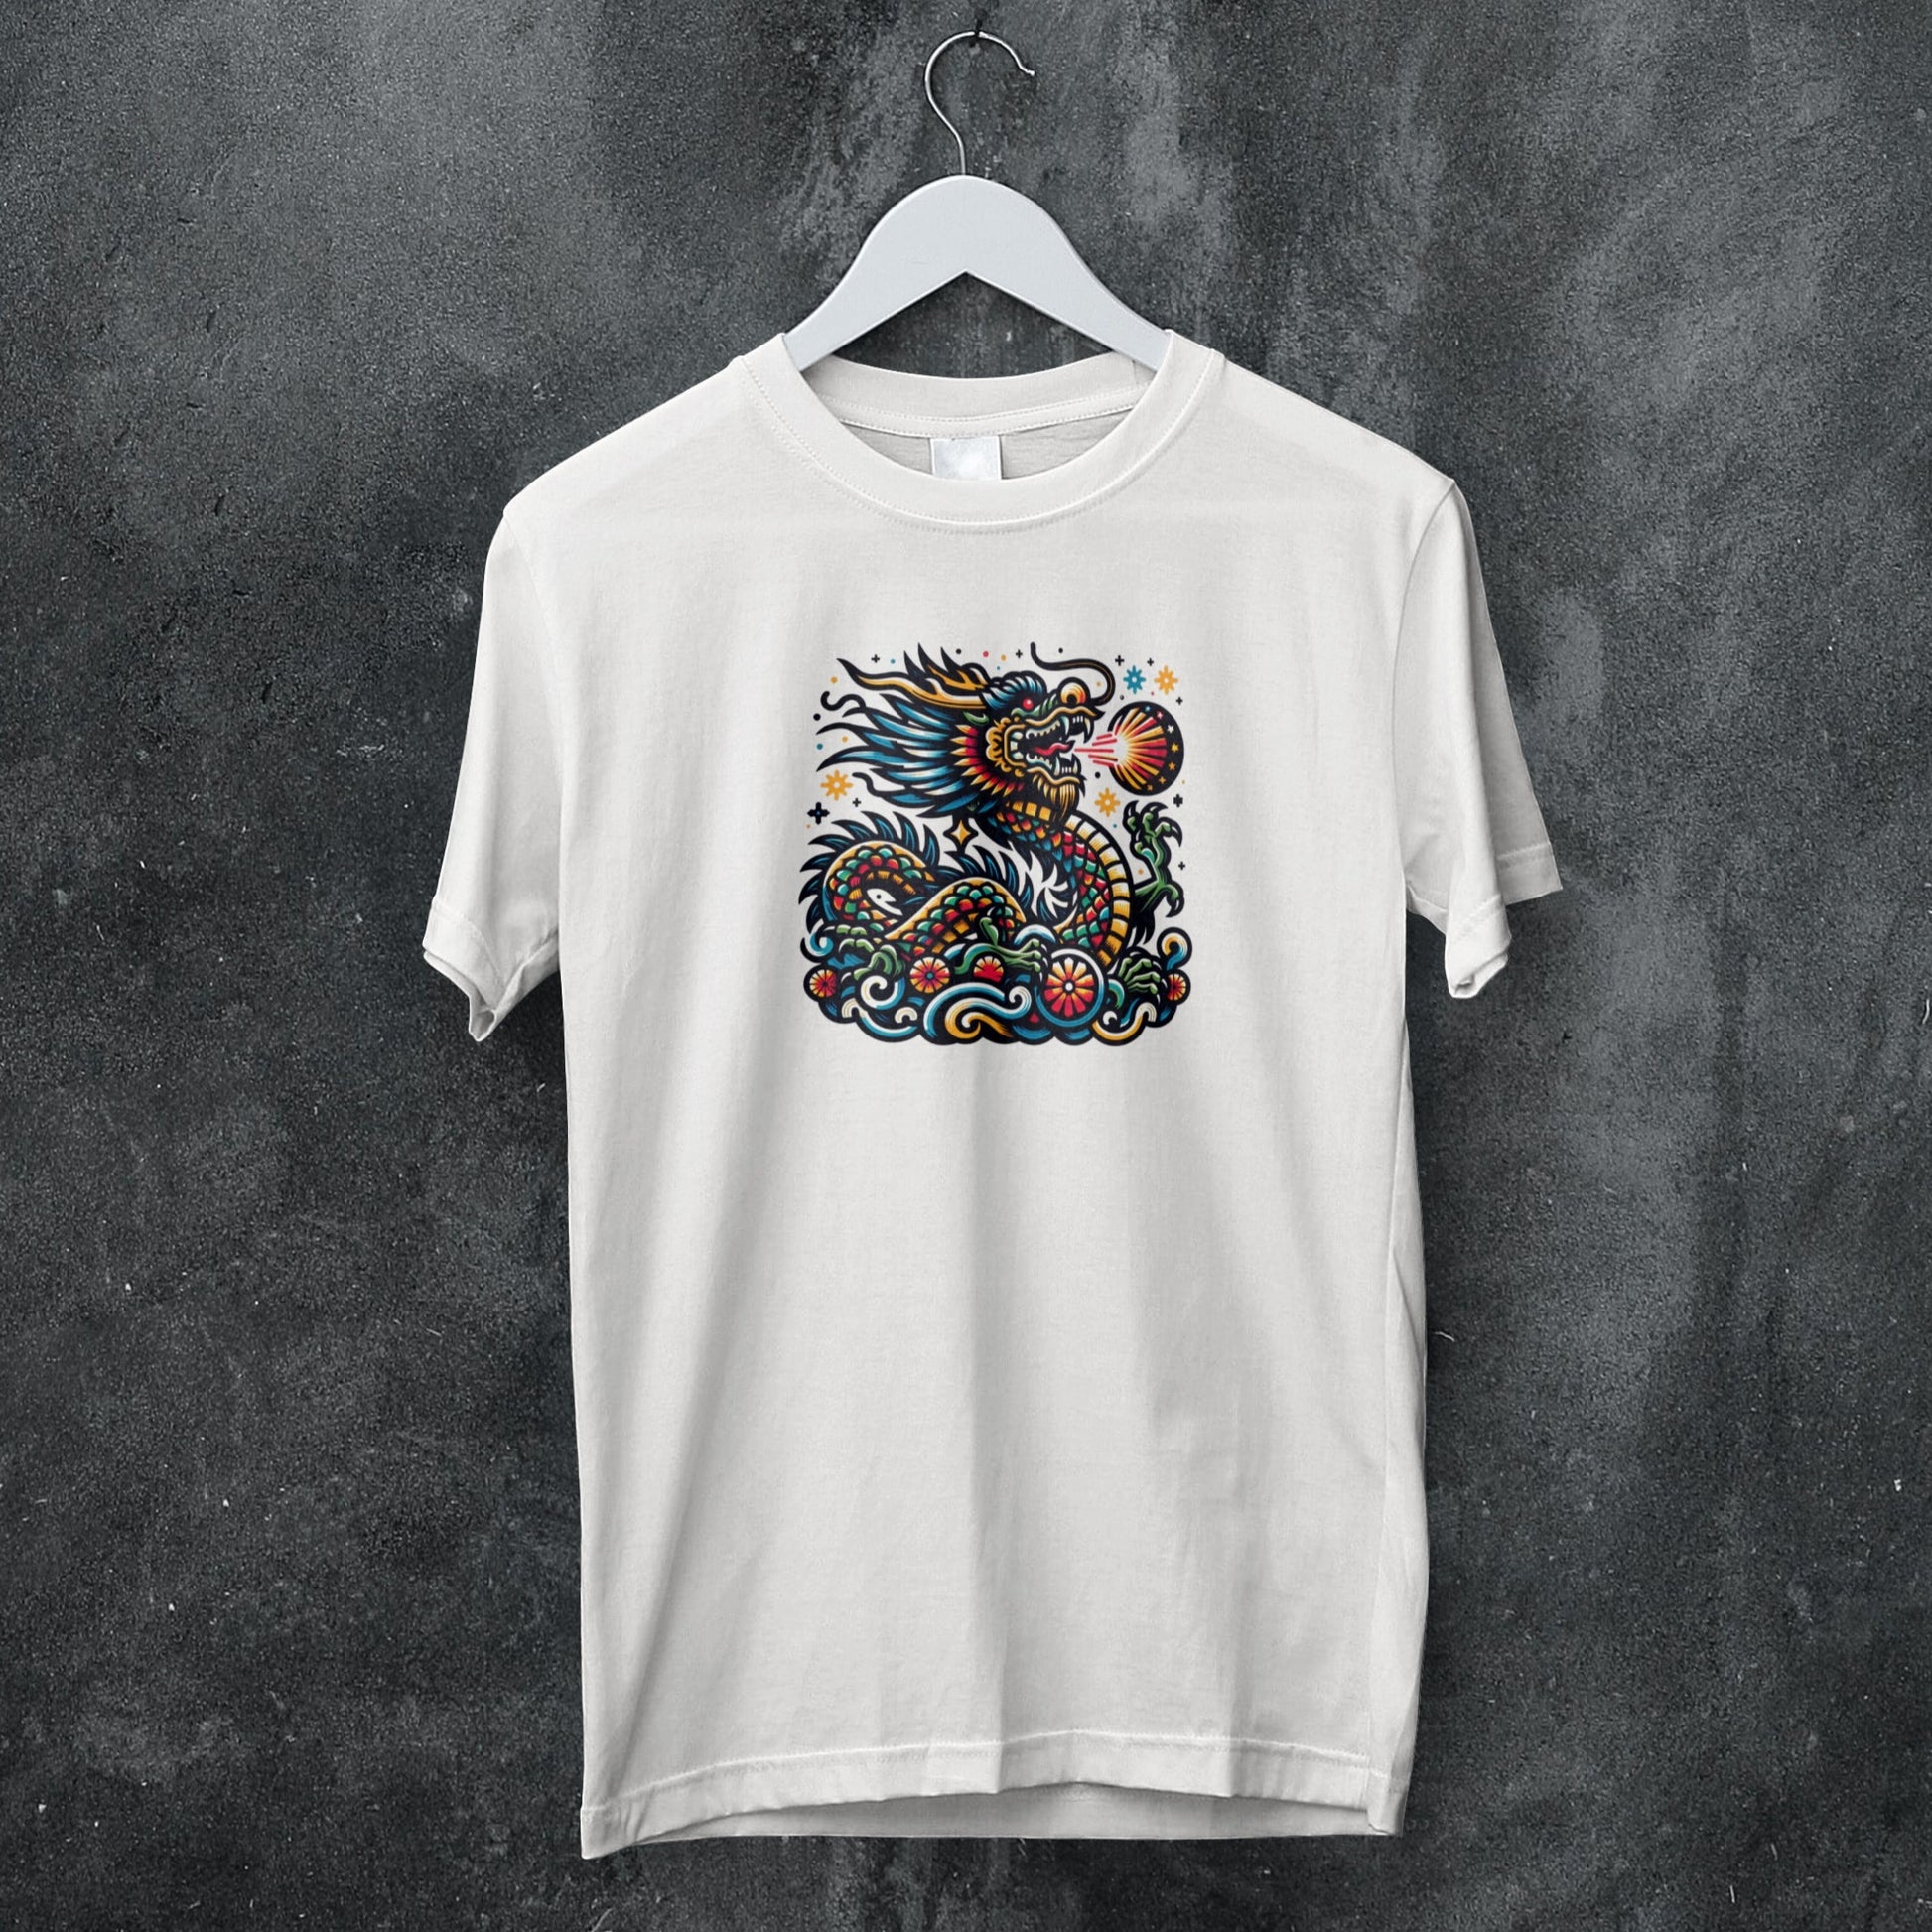 Mythical Dragon T-shirt - Tortuna